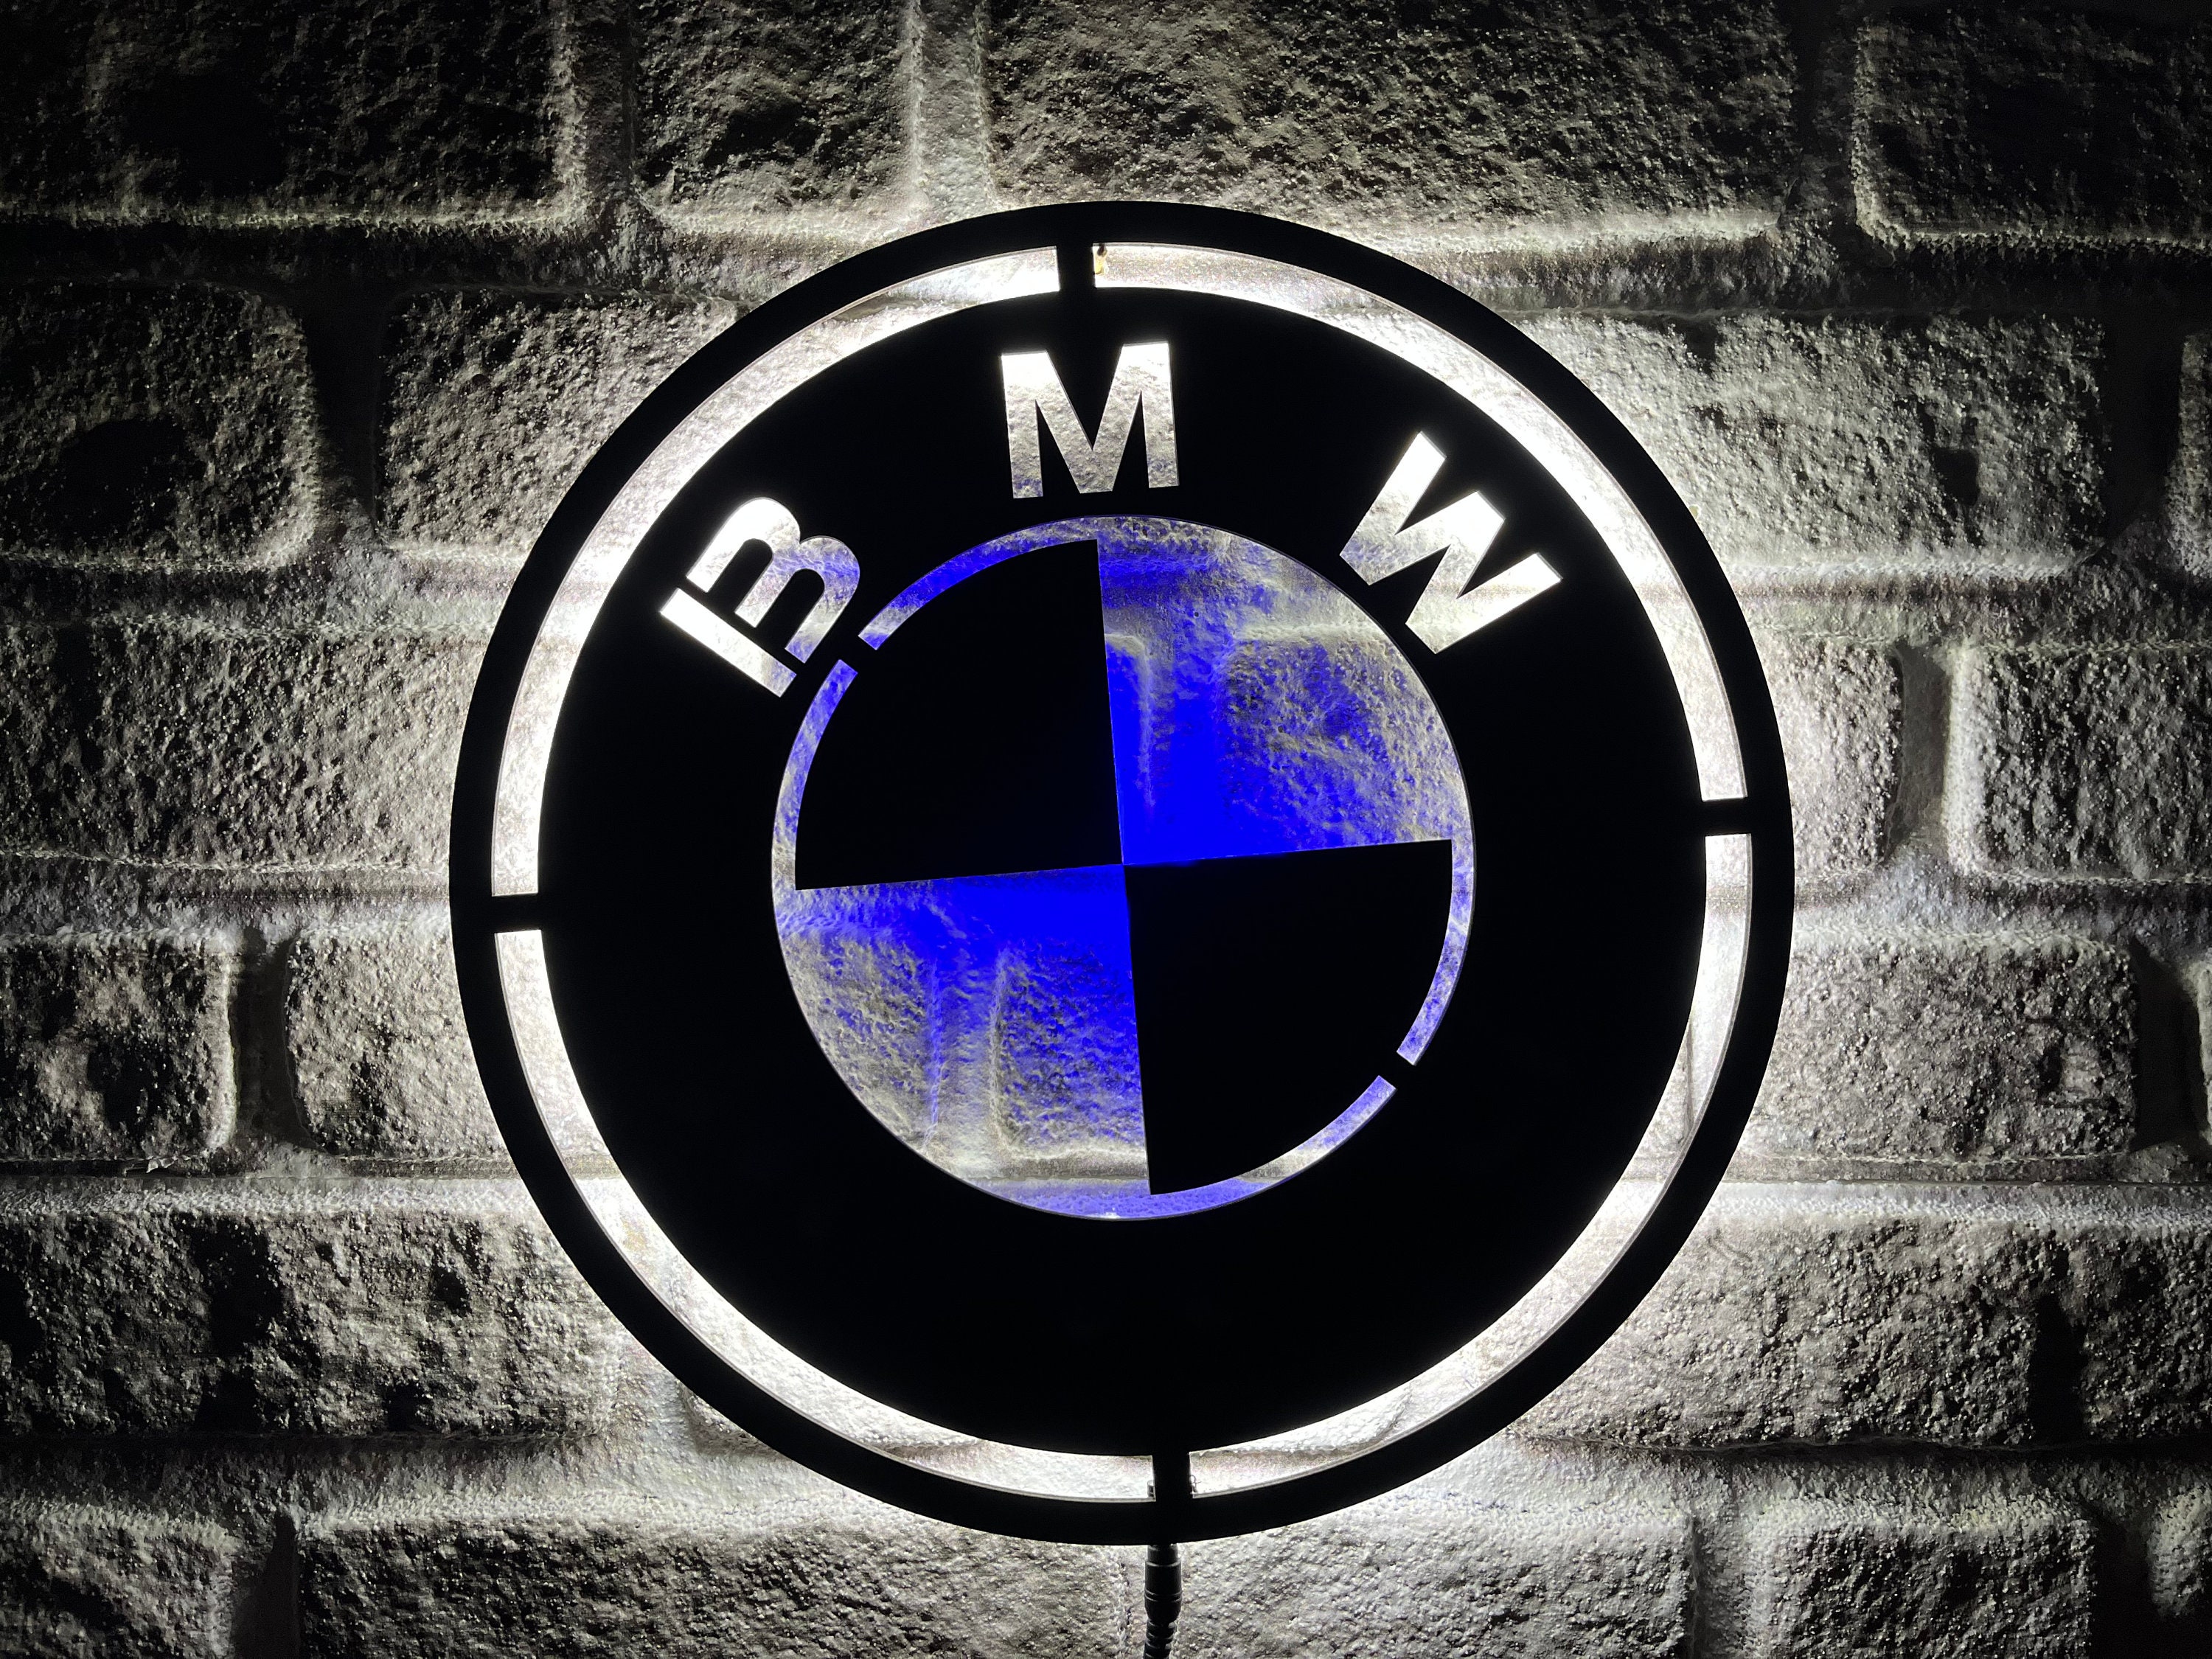 Bmw light wall sign, Bmw logo sign, Bmw led sign, Bmw neon sign